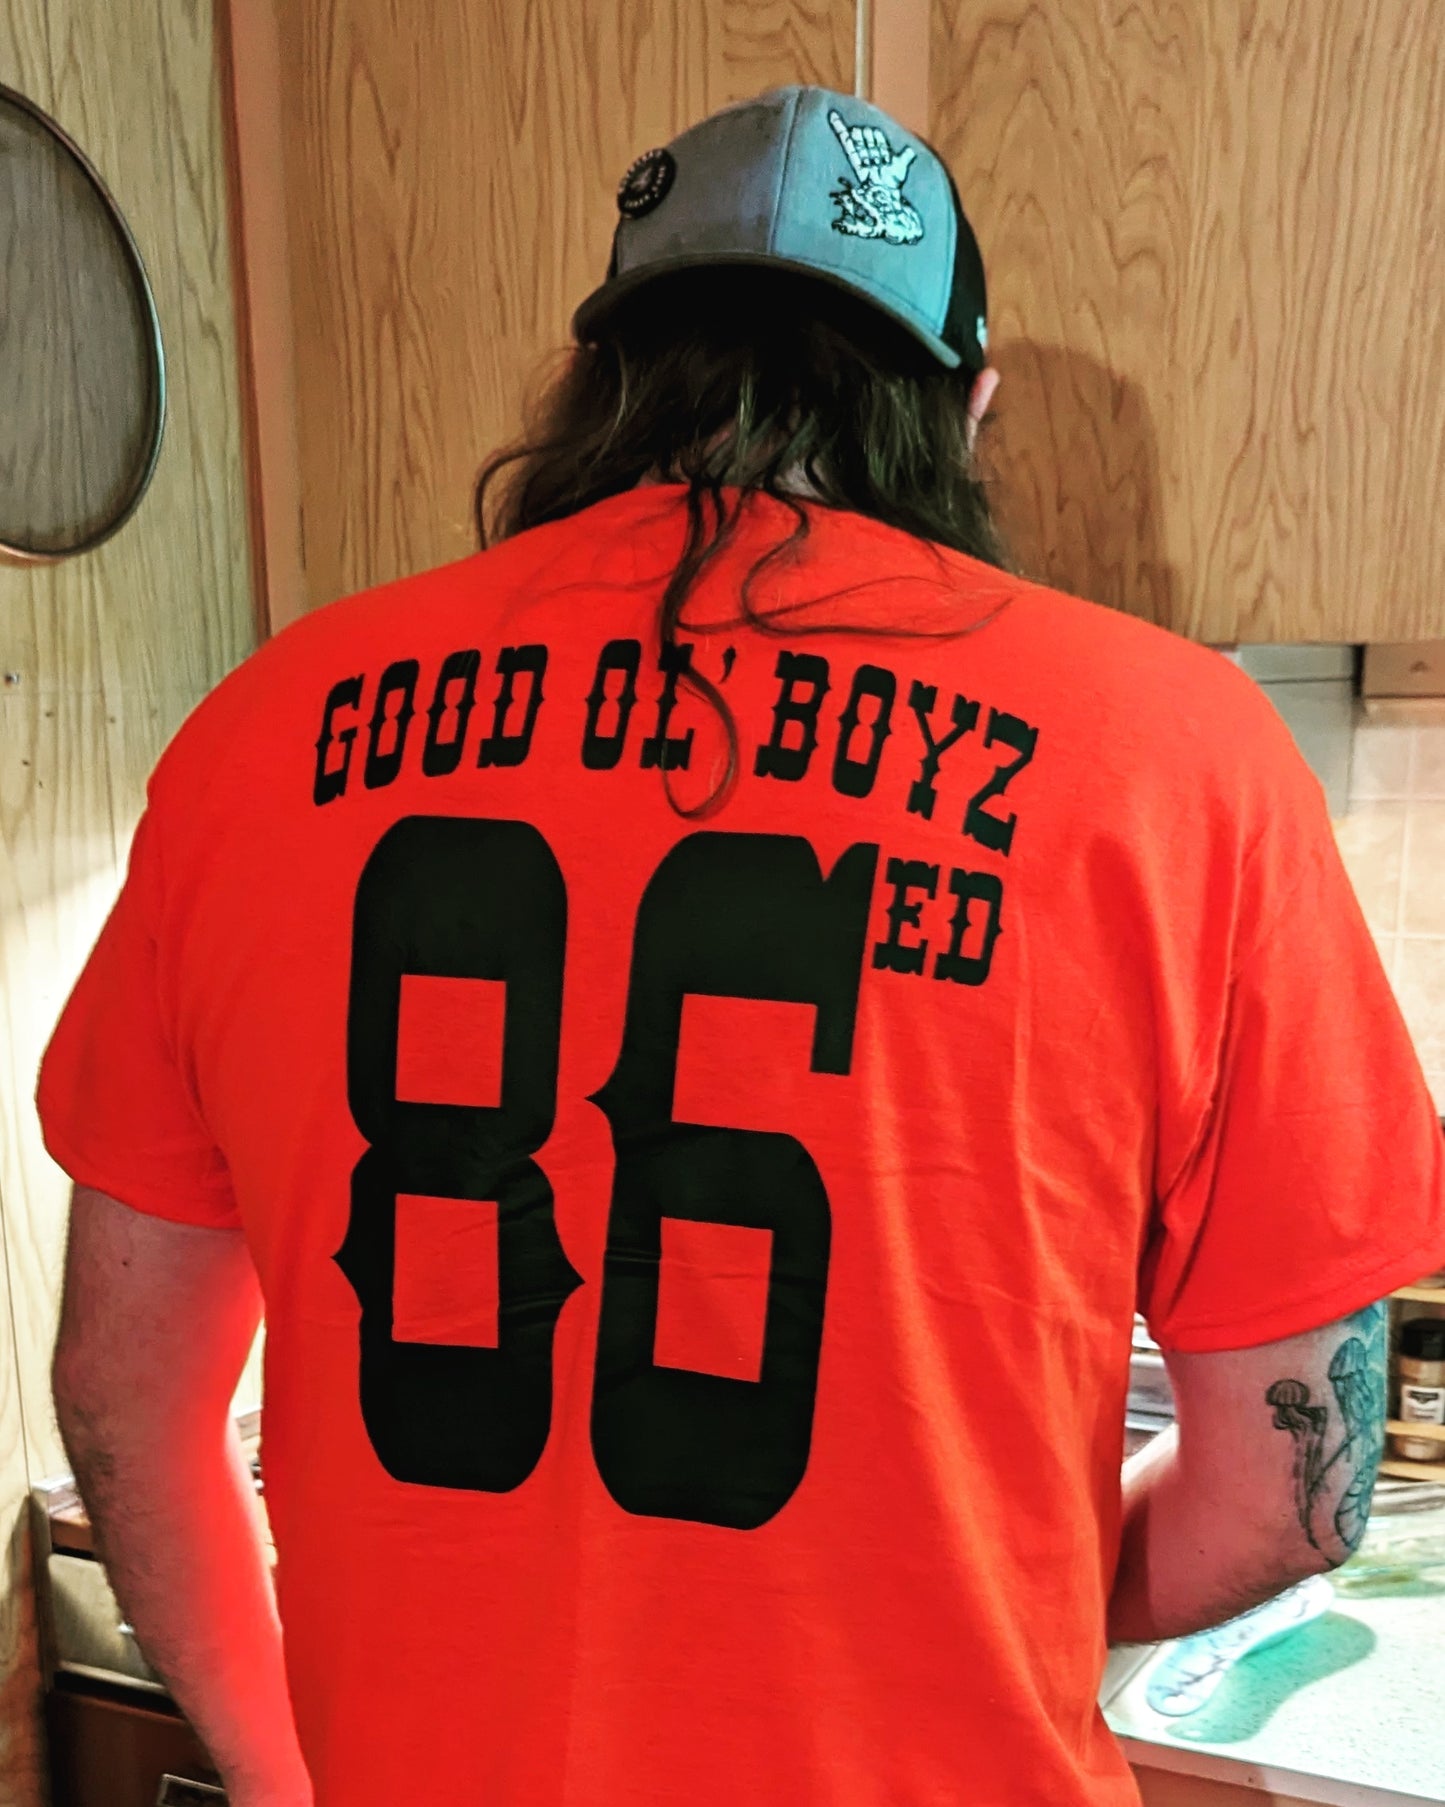 Good Ol' Boyz 86ed Official Shirt